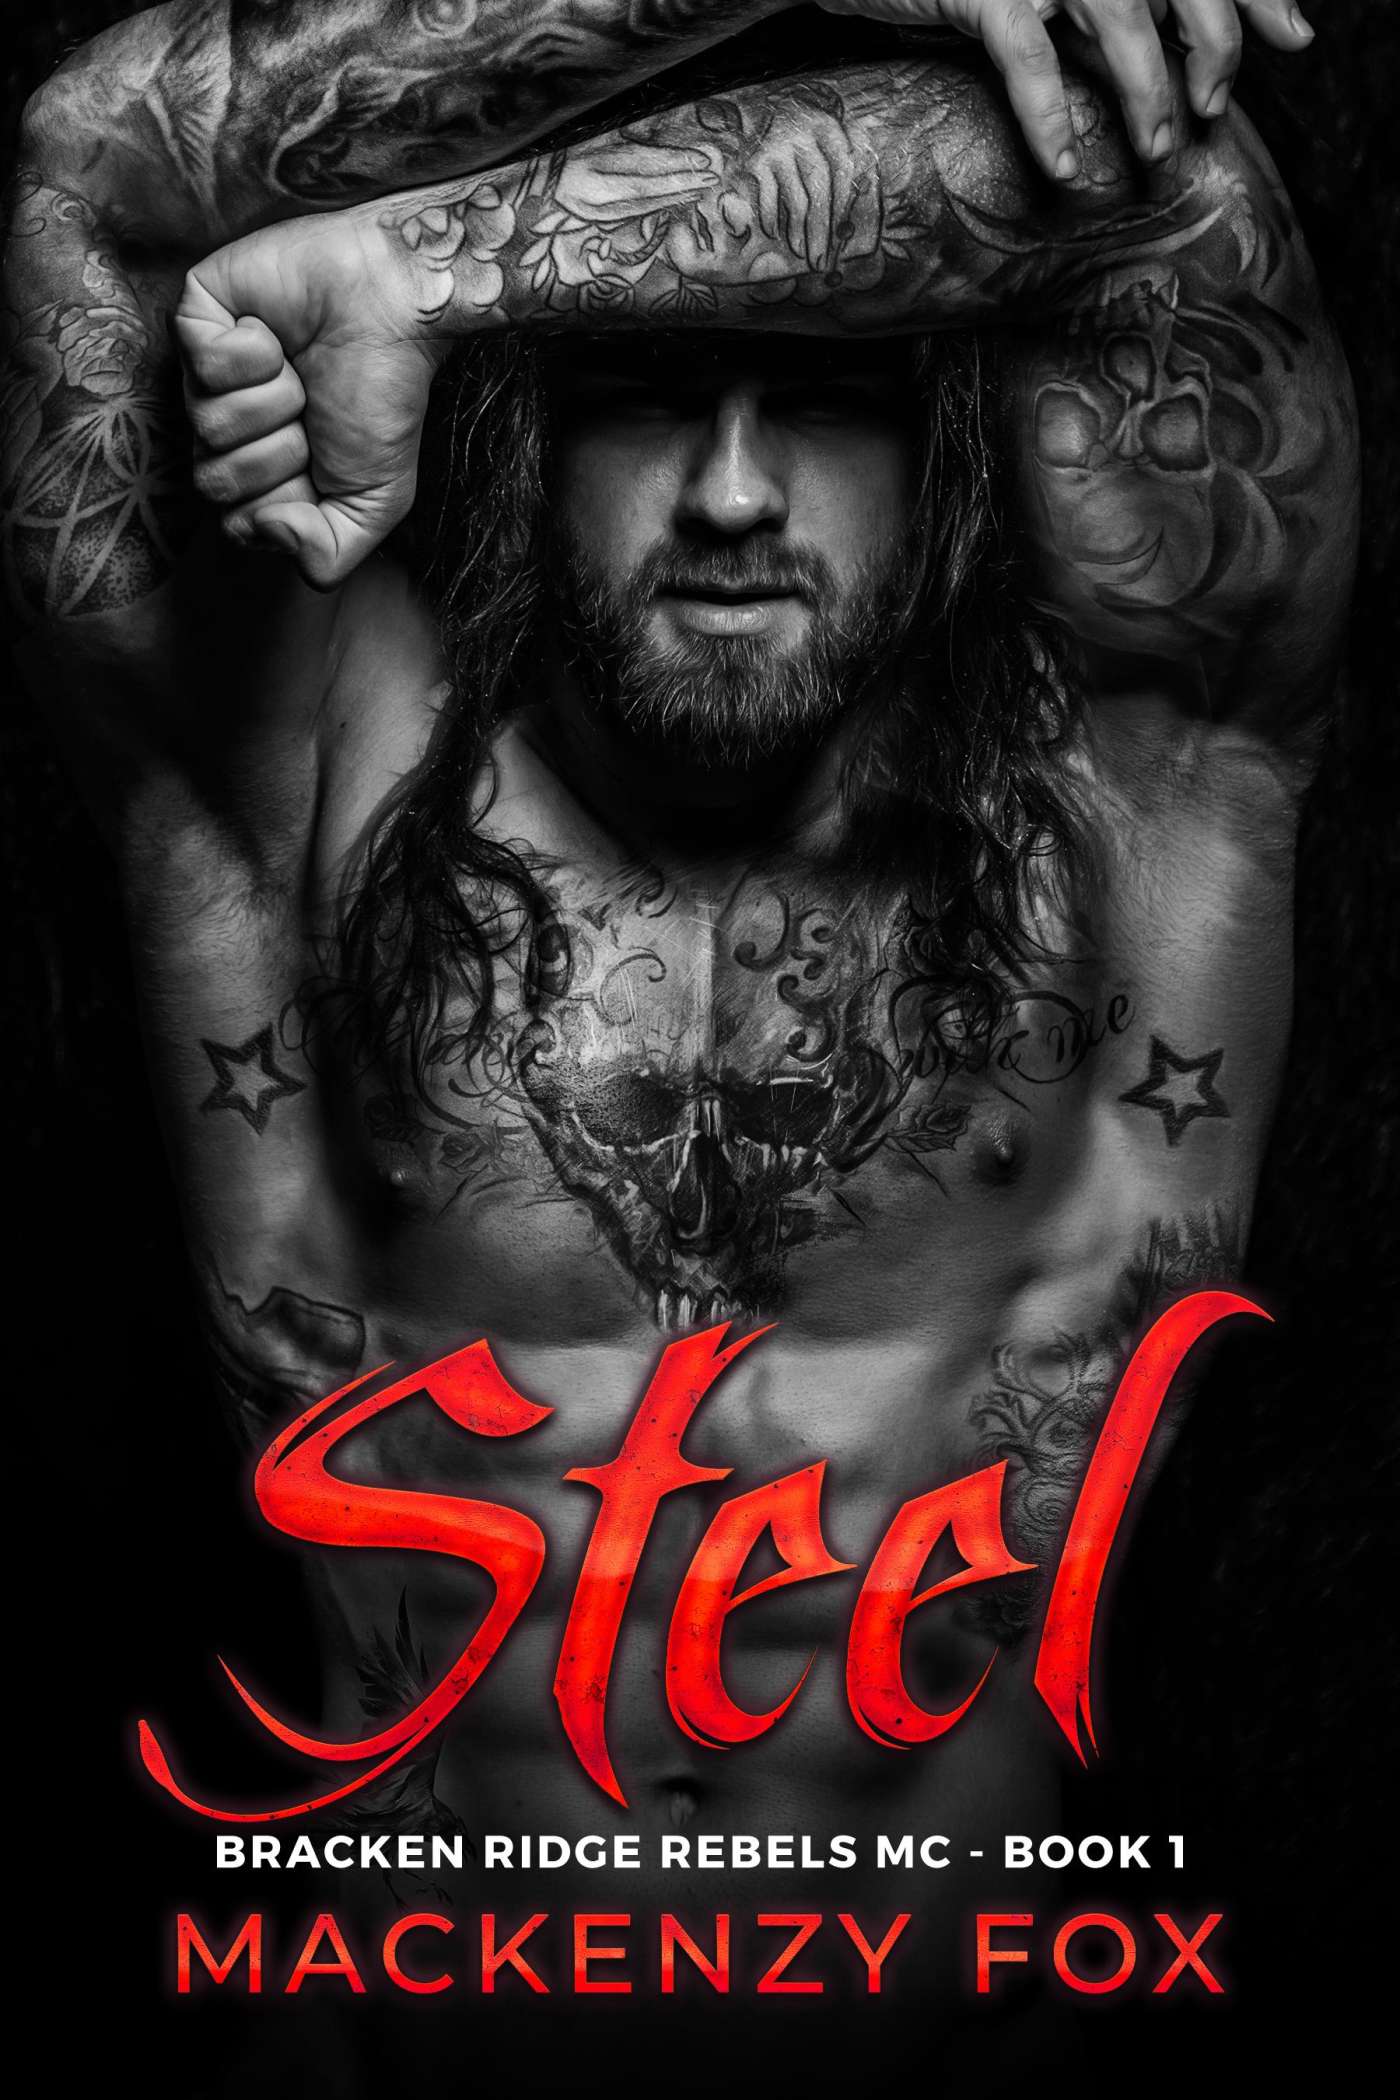 Steel (Bracken Ridge Rebels MC 1) by Mackenzy Fox